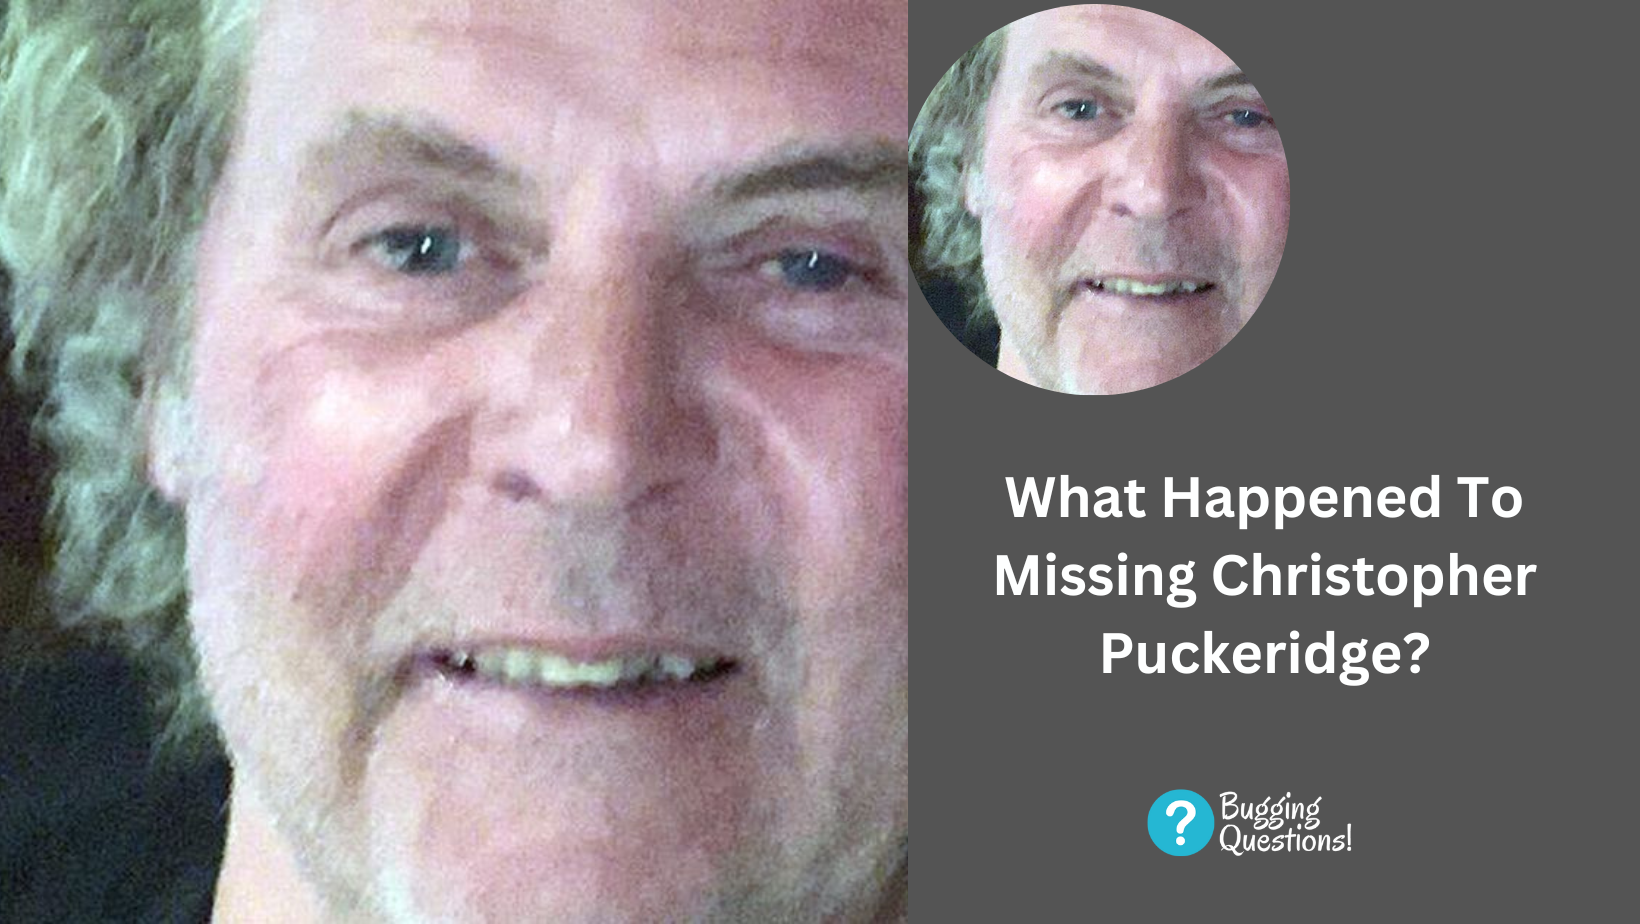 What Happened To Missing Christopher Puckeridge?